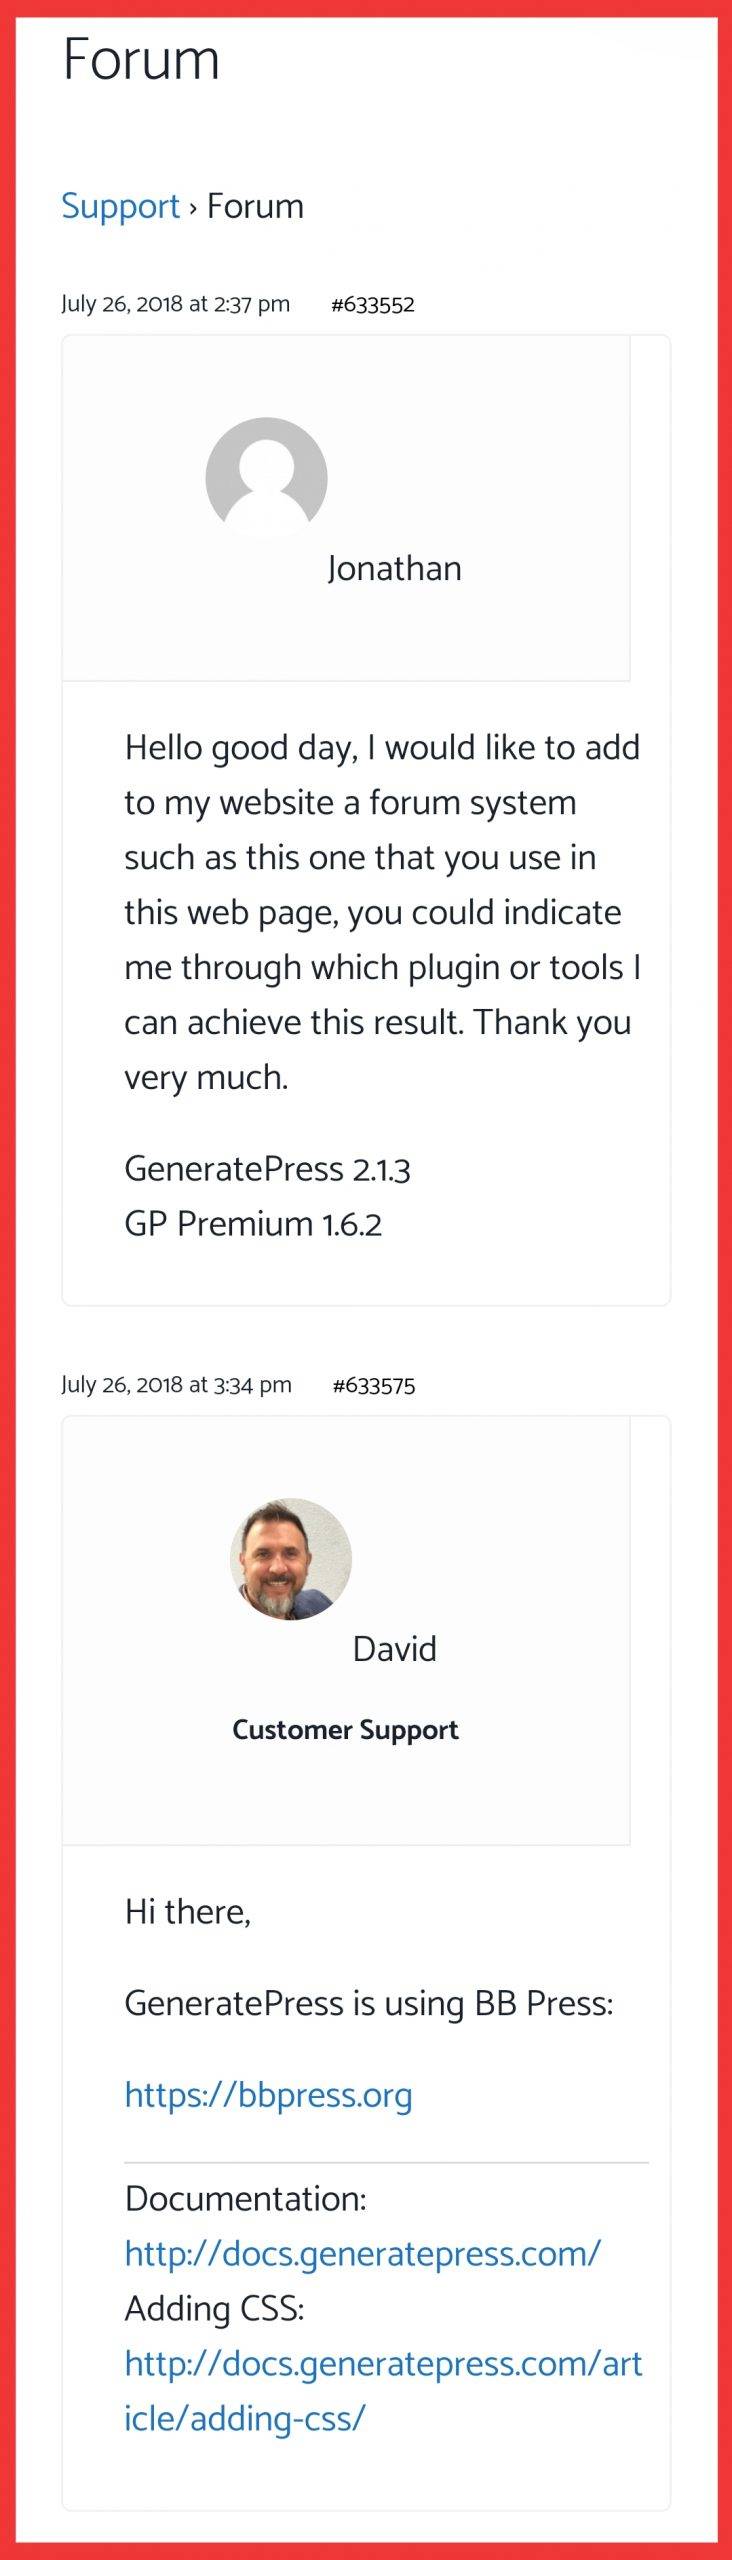 Generatepress Review